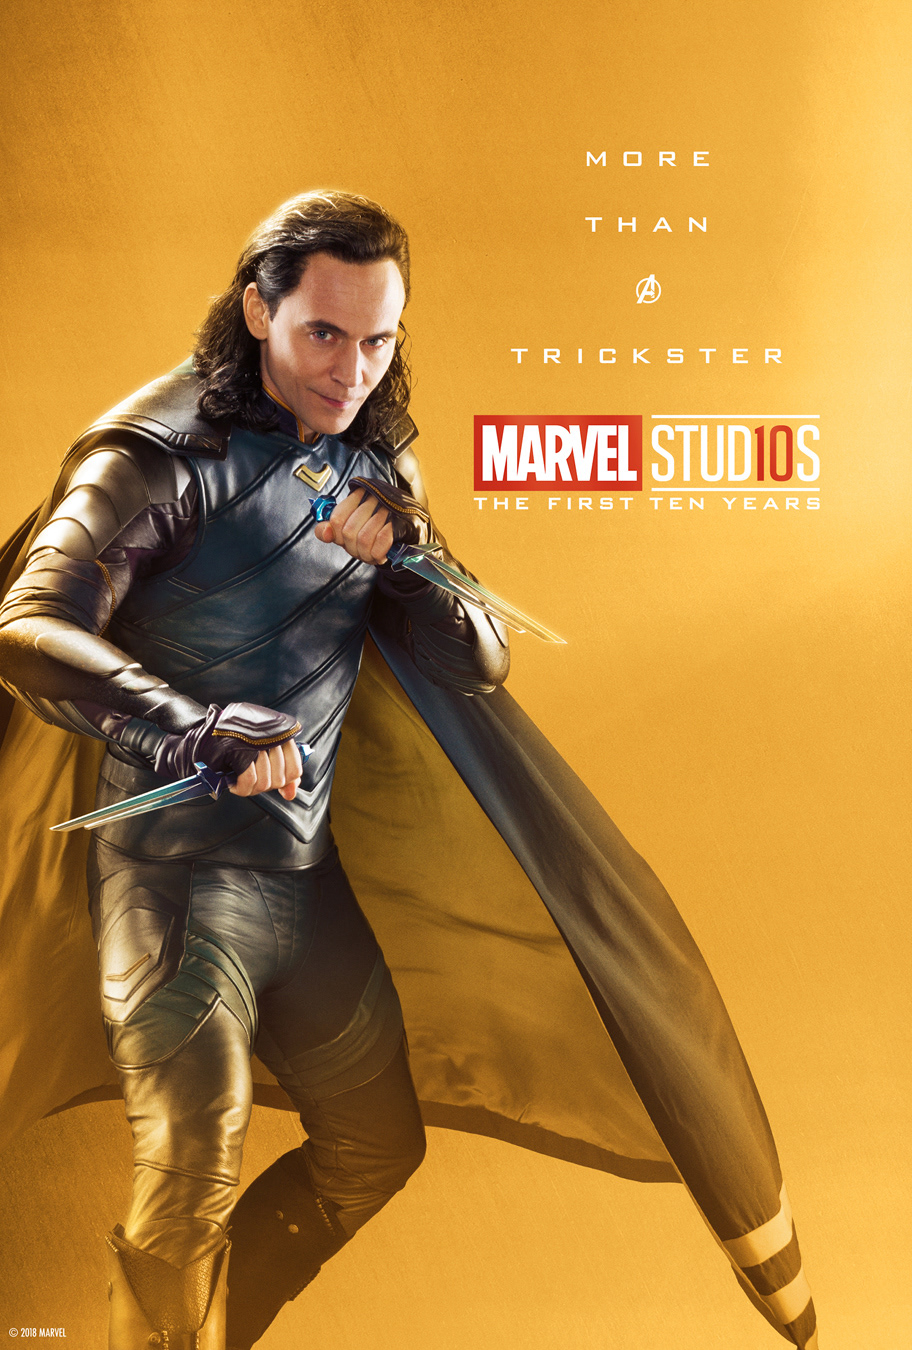 marvel Marvel Studios poster one sheet key art iron man captain america spider-man Hulk mcu